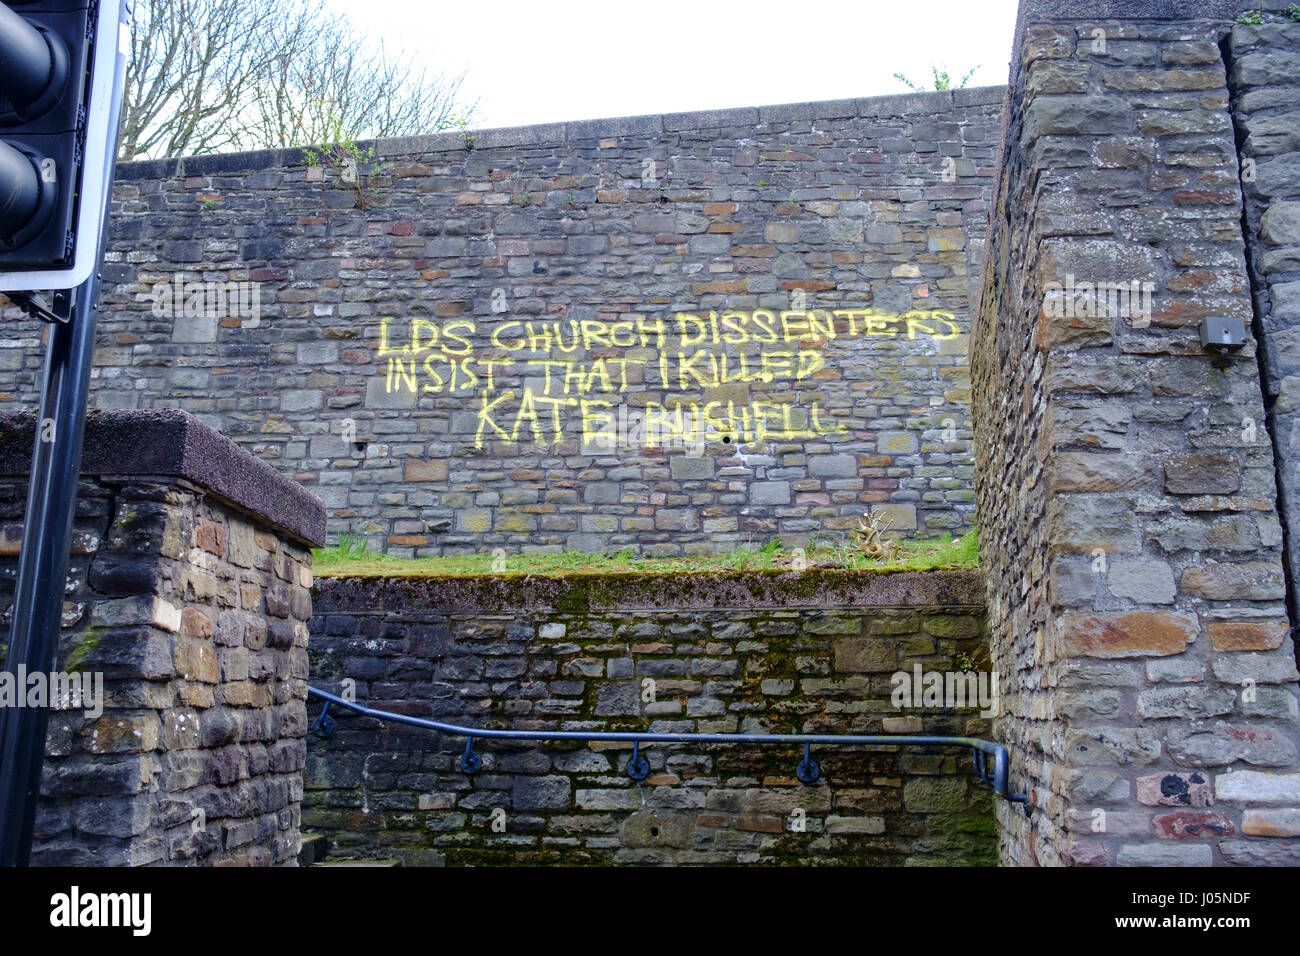 Odd and disturbing graffiti around the City of Bristol England UK Stock Photo